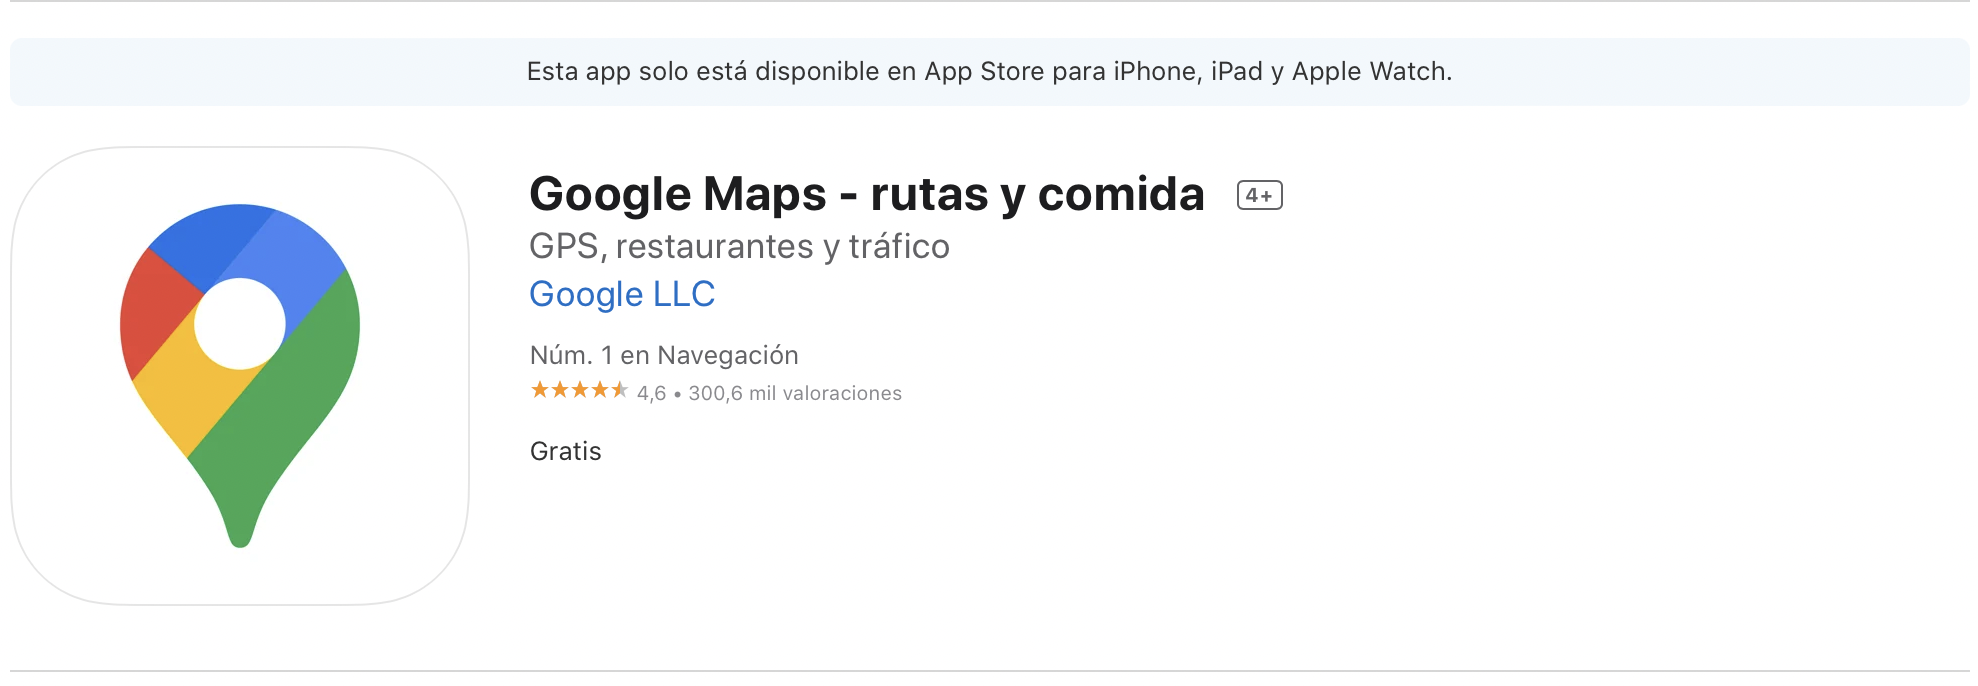 Google Maps.  (photo: AppStore)